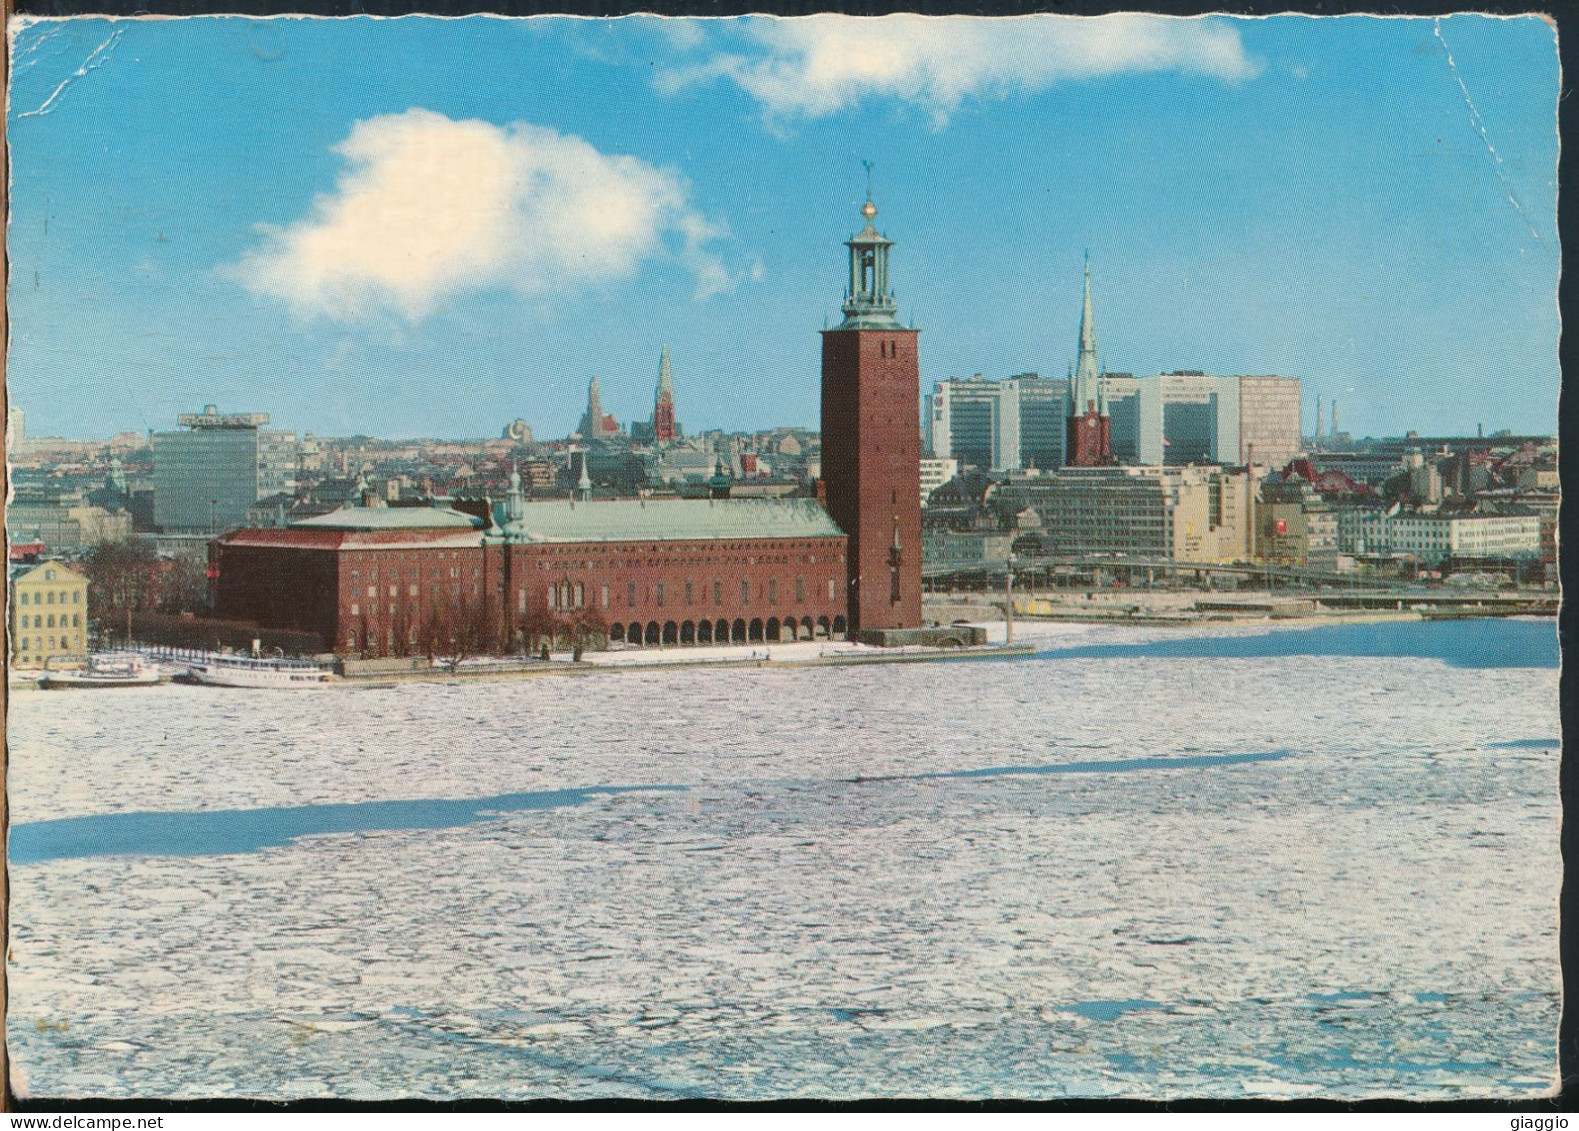 °°° 30904 - SWEDEN - STOCKHOLM - STADSHUSET CITY HALL - 1984 °°° - Schweden